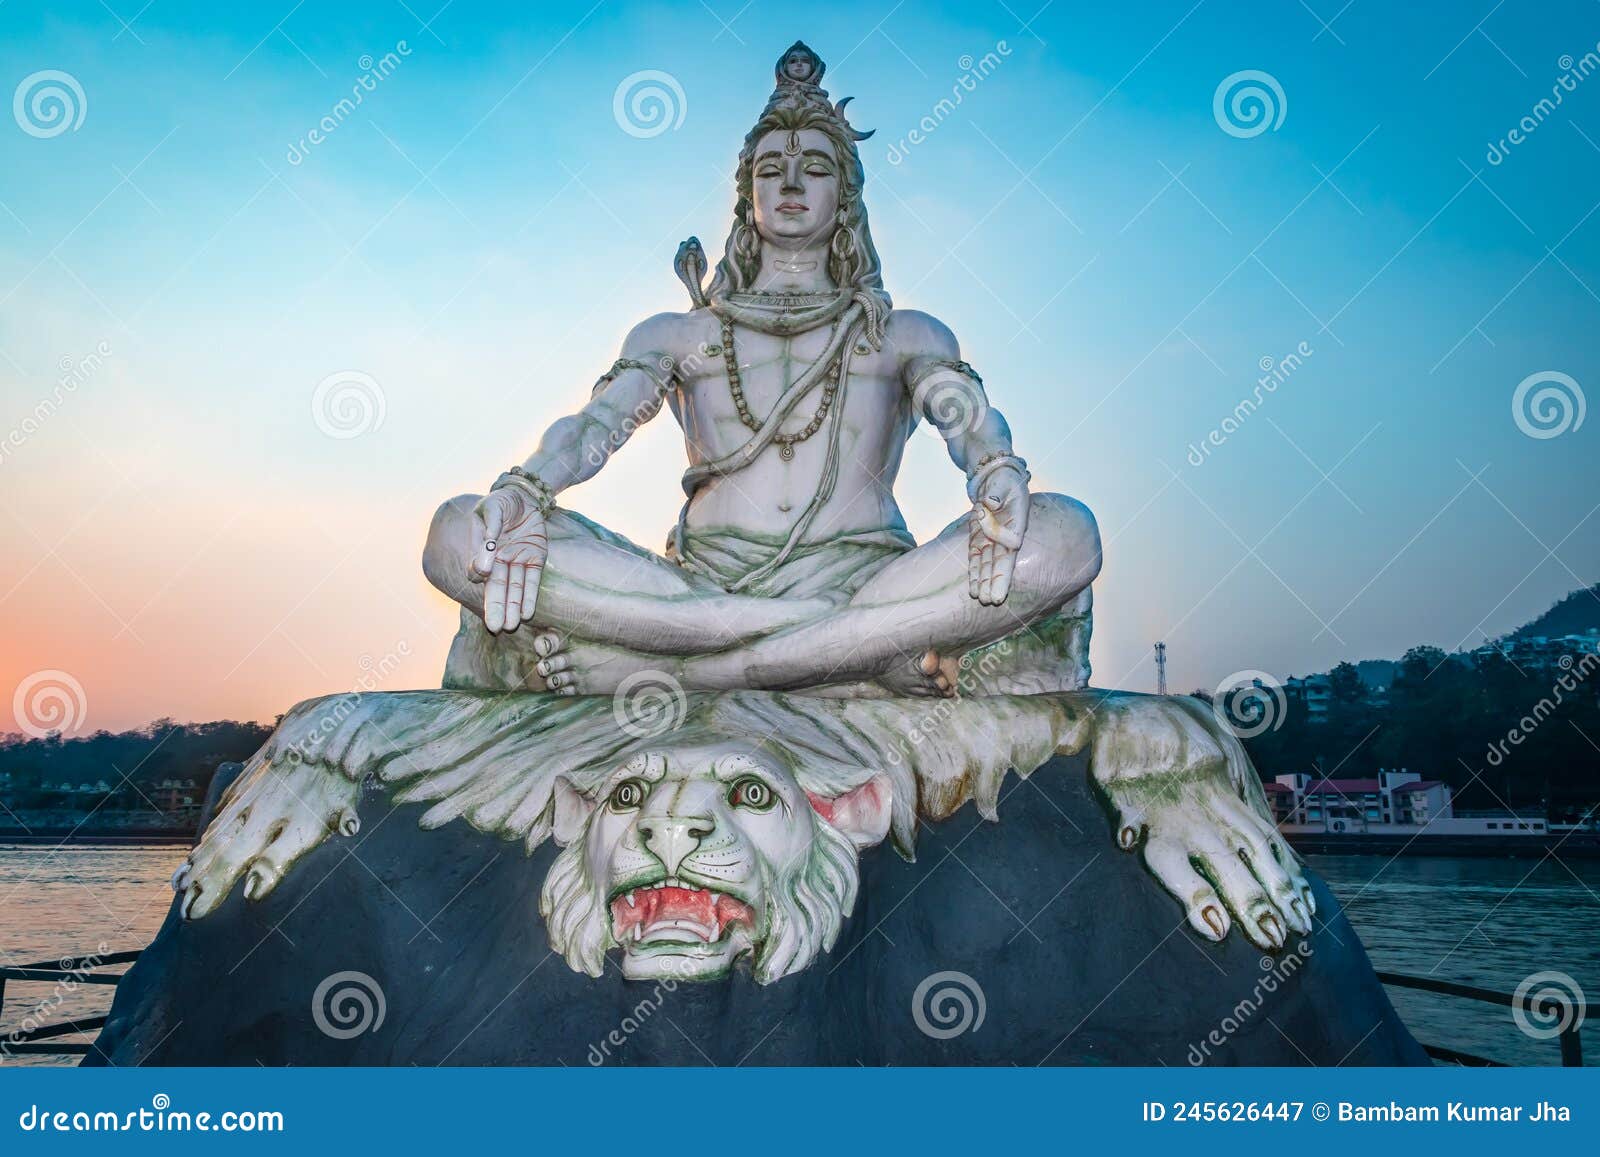 Hindu God Lord Shiva Statue in Meditation Posture with Dramatic ...